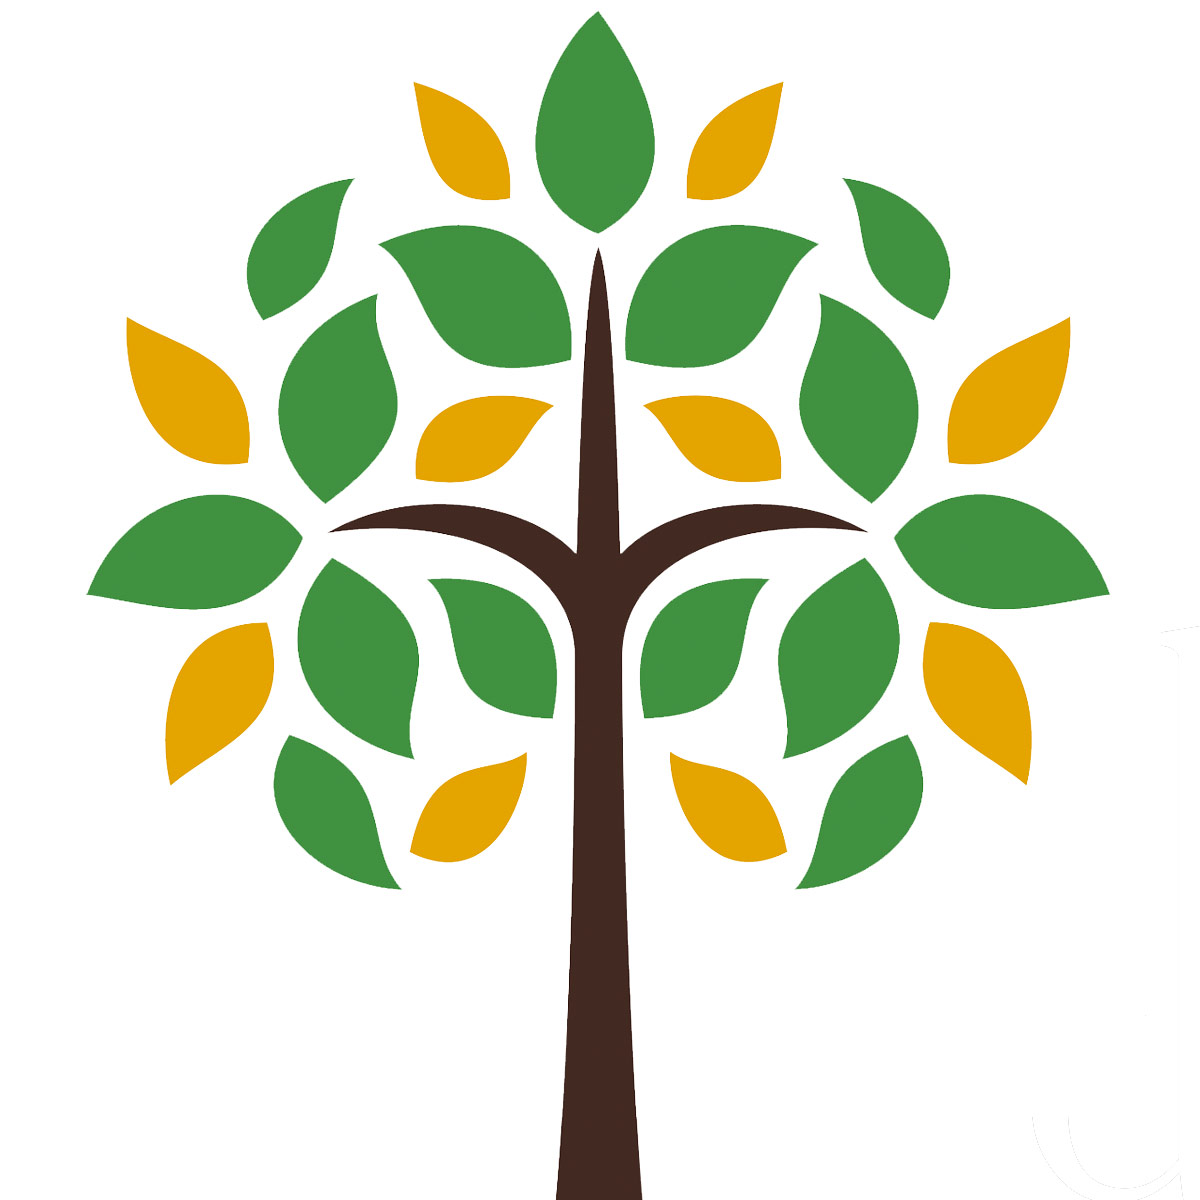 Sponsoring a tree : We plant trees, help us!